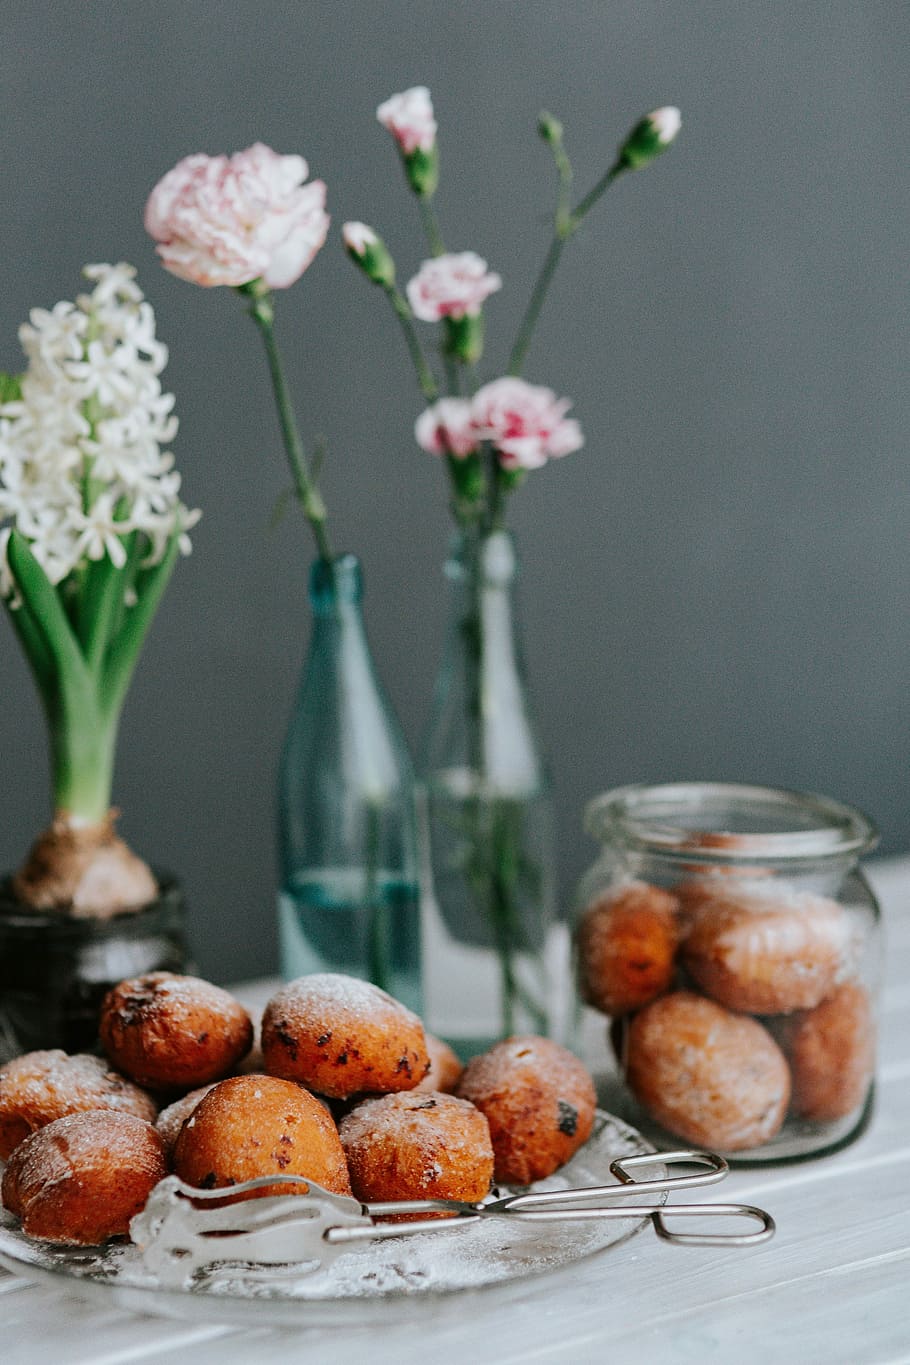 Pączki - Traditional polish doughnuts, flowers, sweet, food